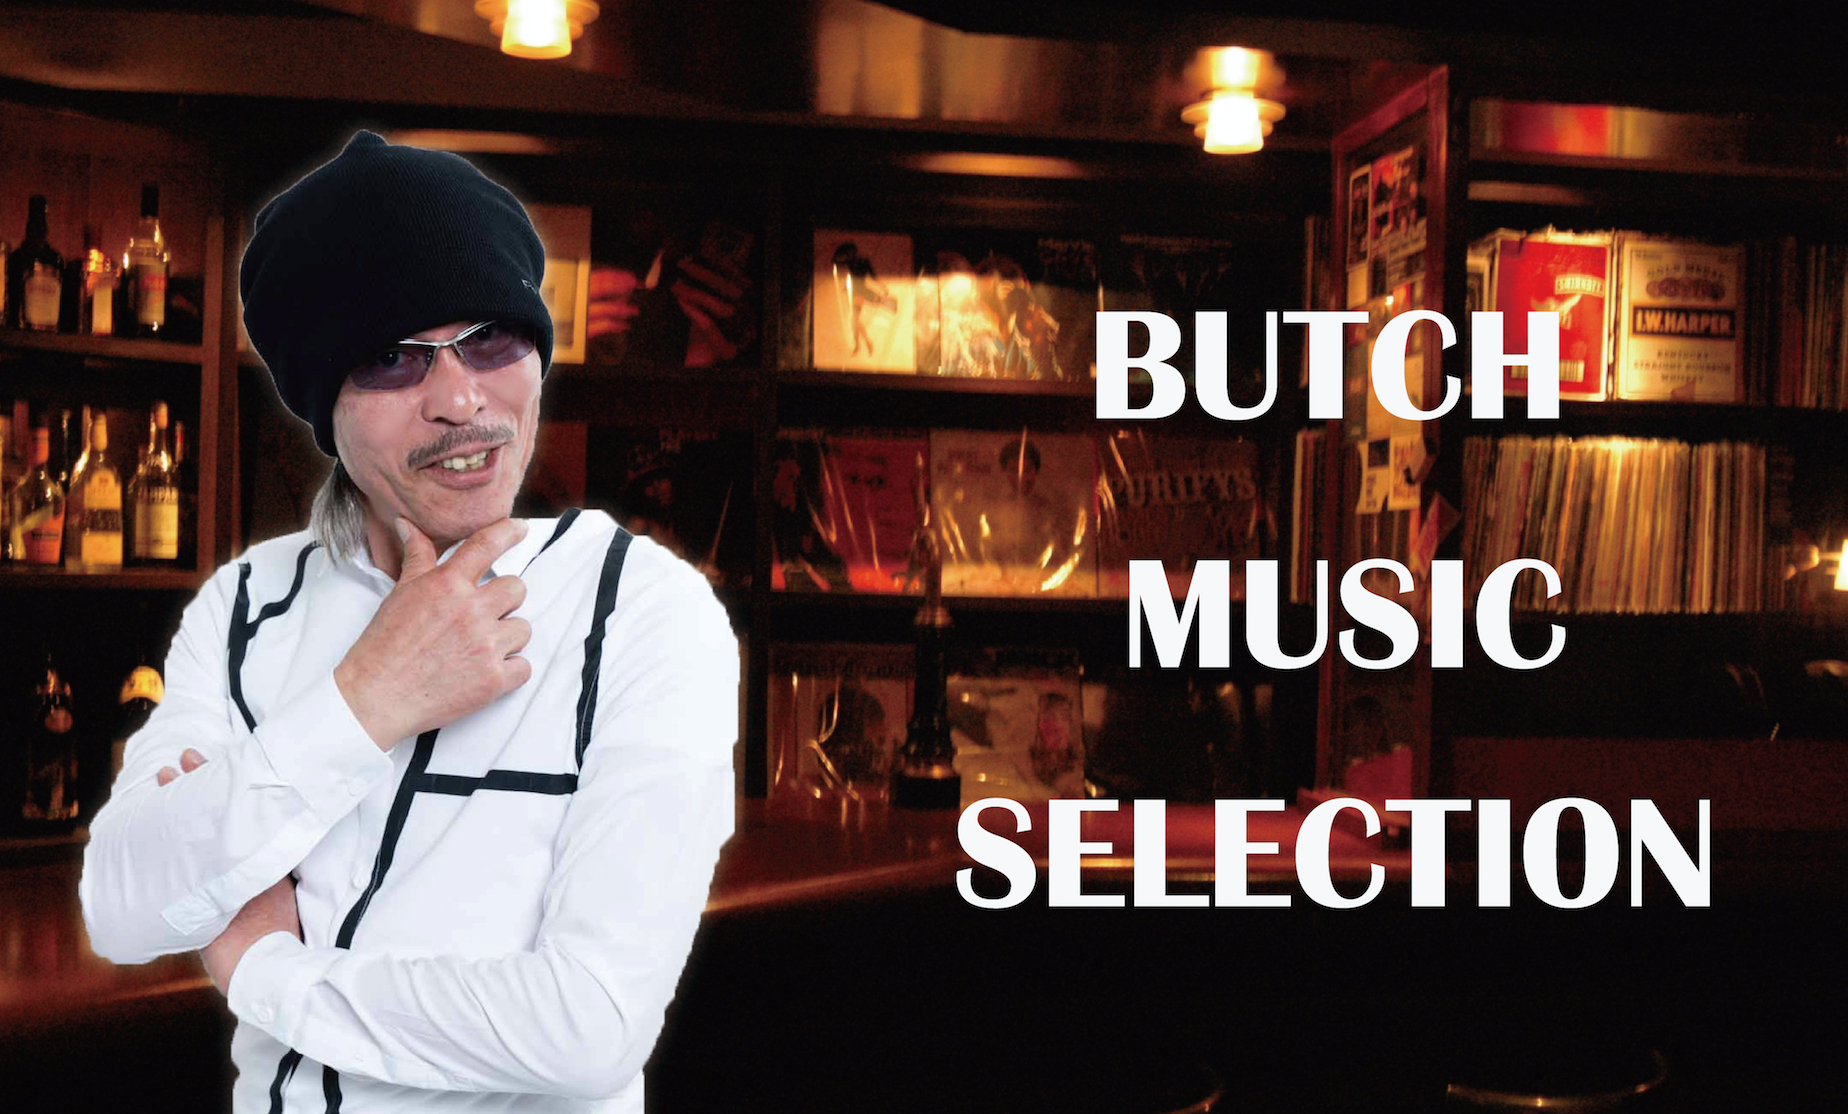 BUTCH MUSIC SELECTION